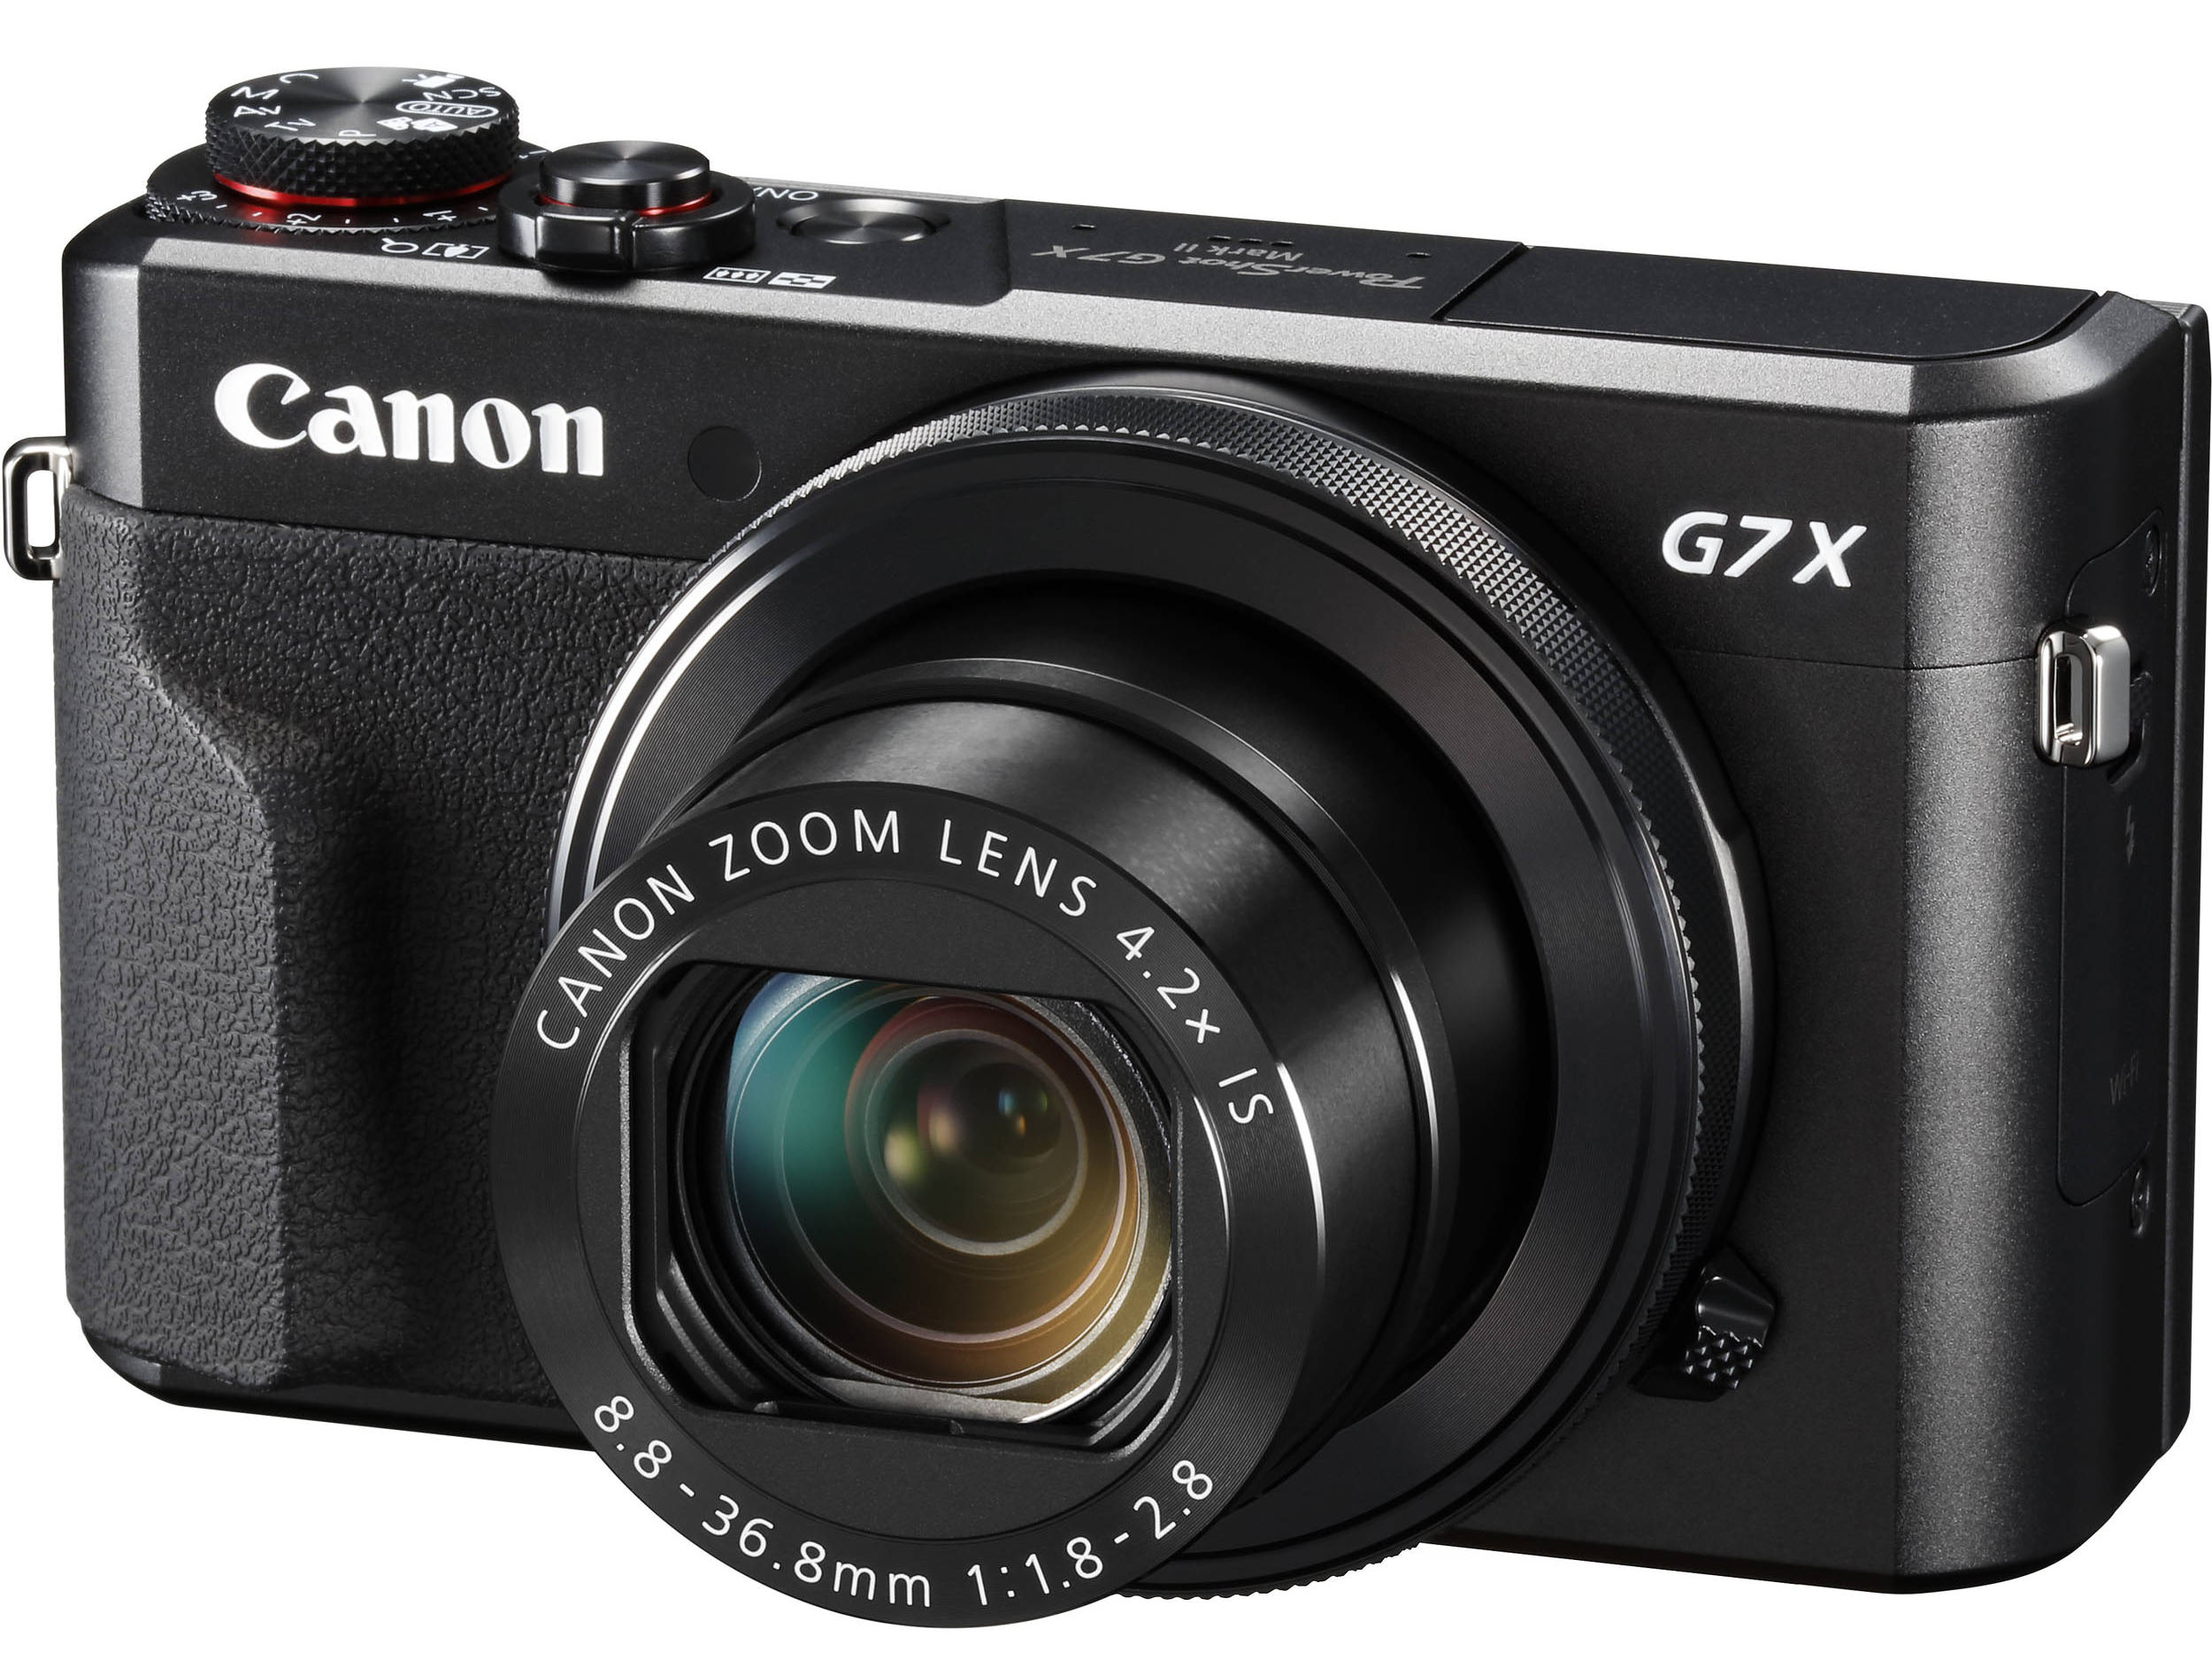 Camerarace  Canon PowerShot G7 X Mark II vs Canon PowerShot G7 X Mark III